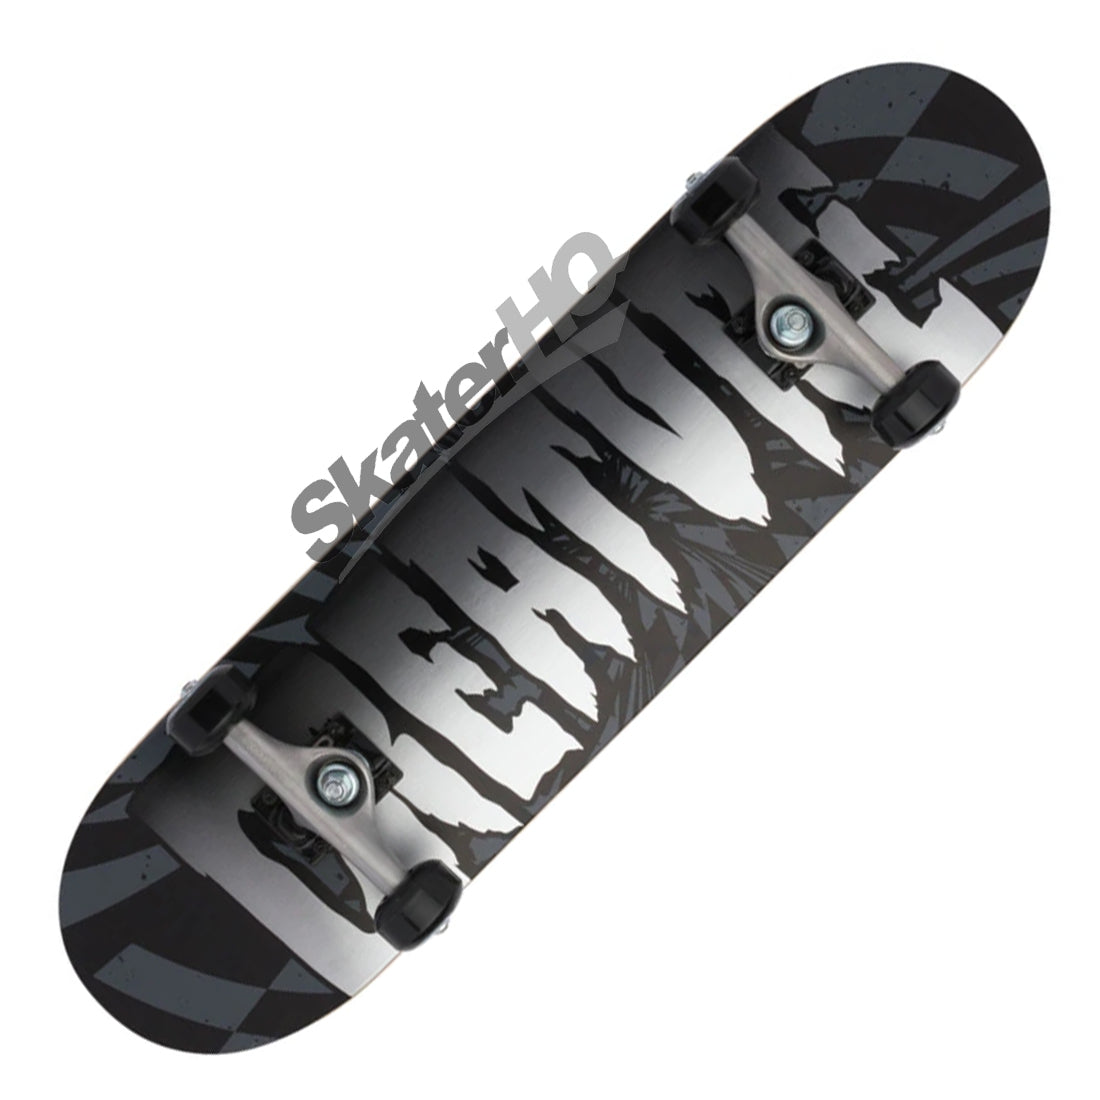 Creature Metallic 7.75 Complete softy wheels - Silver/Black Skateboard Completes Modern Street